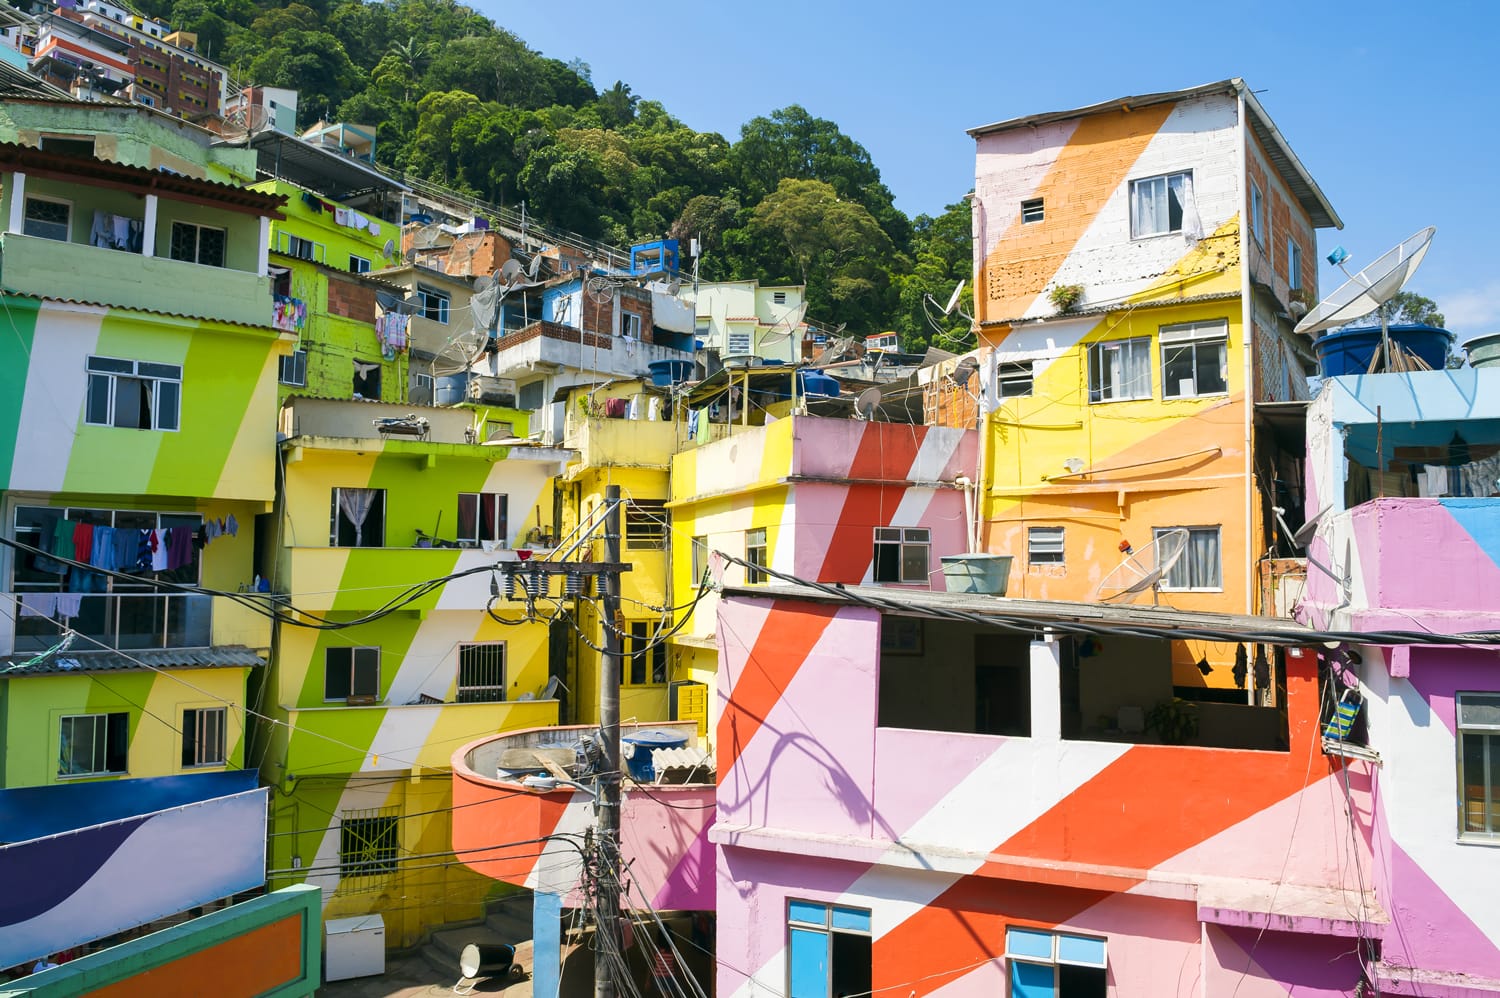 Colorful painted buildings of Favela Santa Marta in Rio de Janeiro Brazil